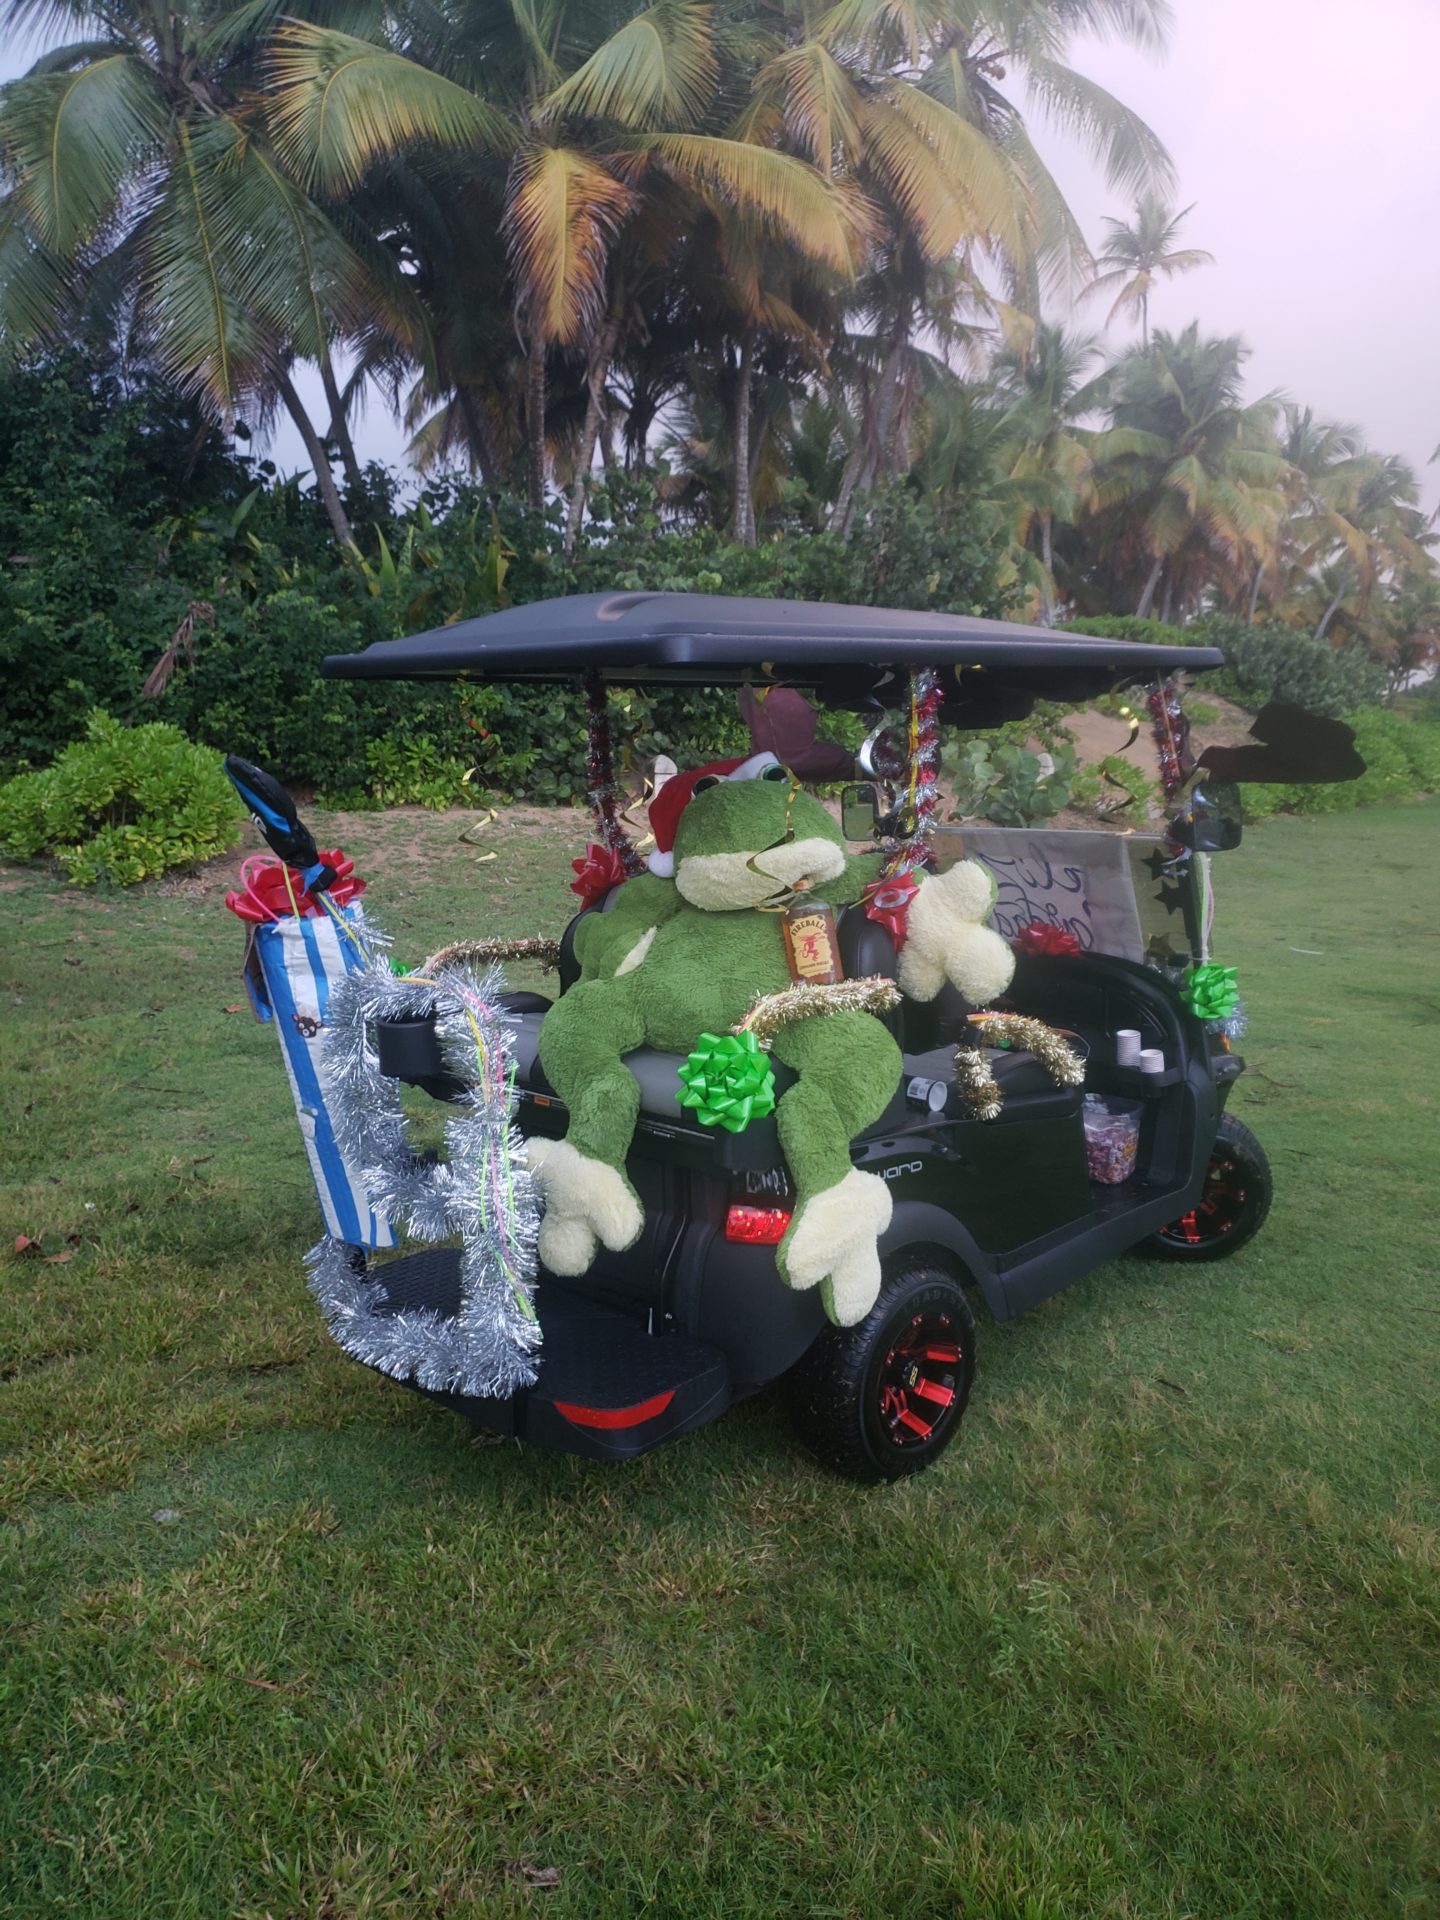 a stuffed animal on a golf cart